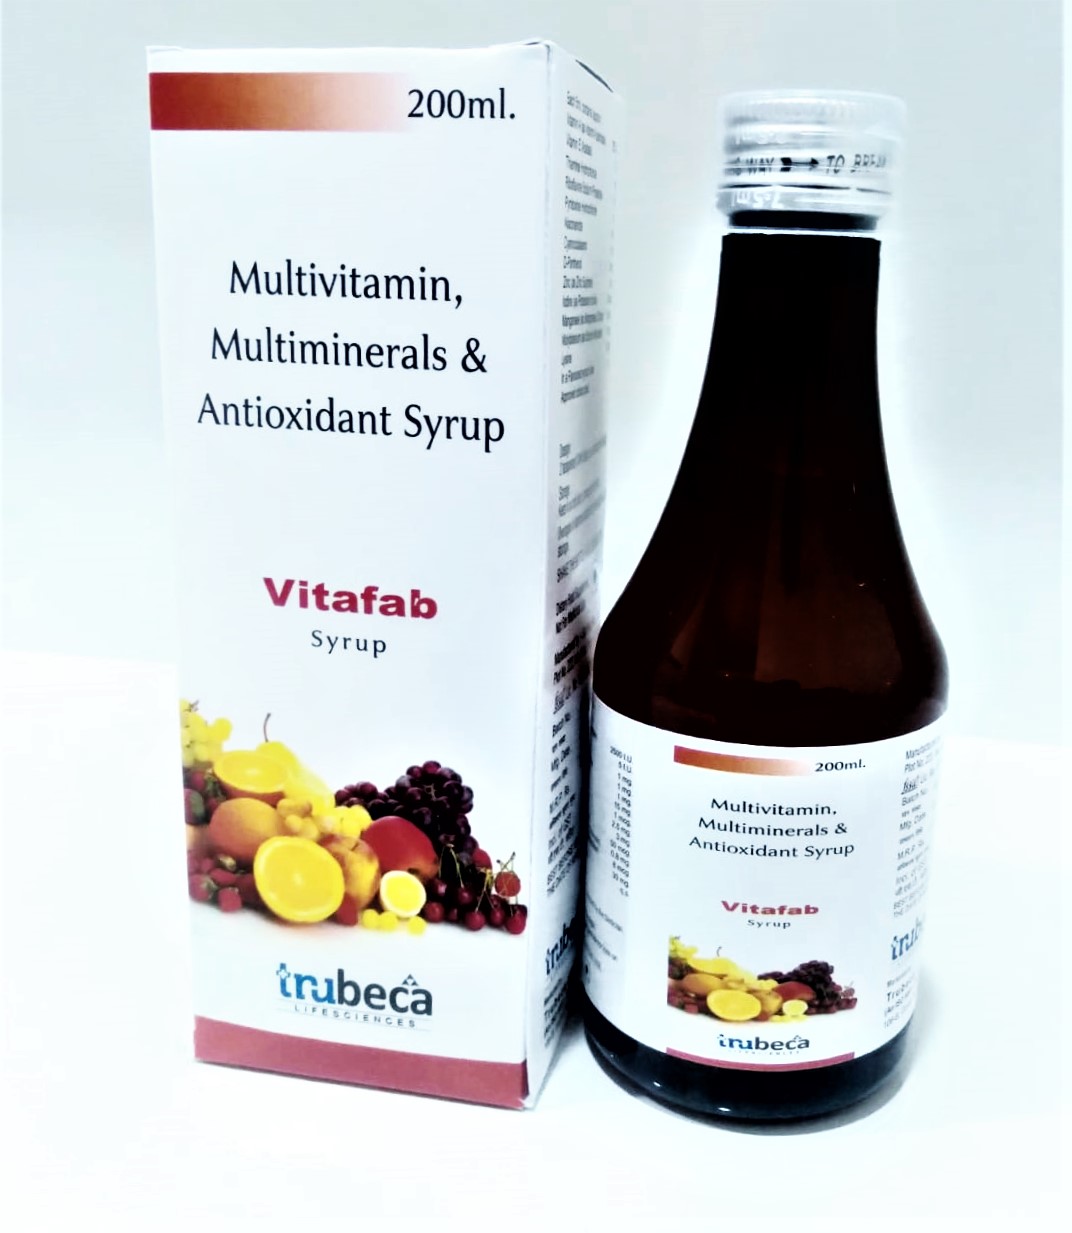 multivitamins + multiminerals + antioxidant syrup with monocarton (food)